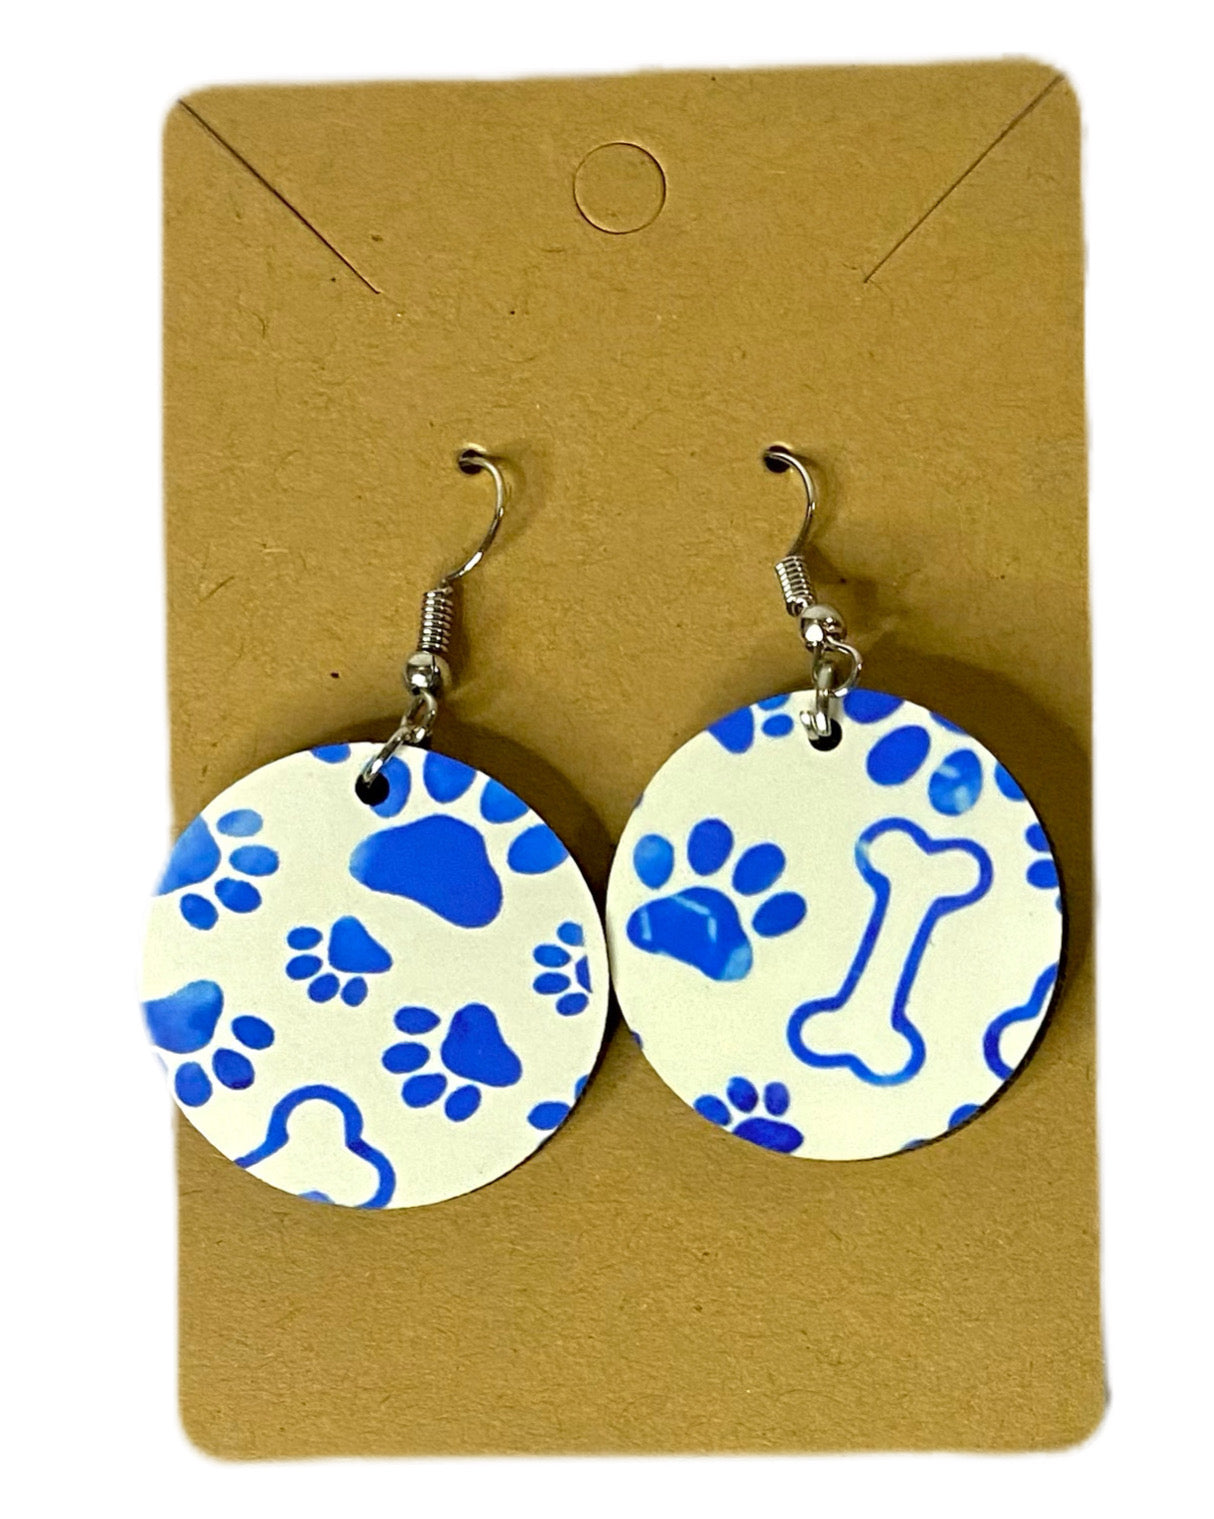 Dog themed addys design earrings